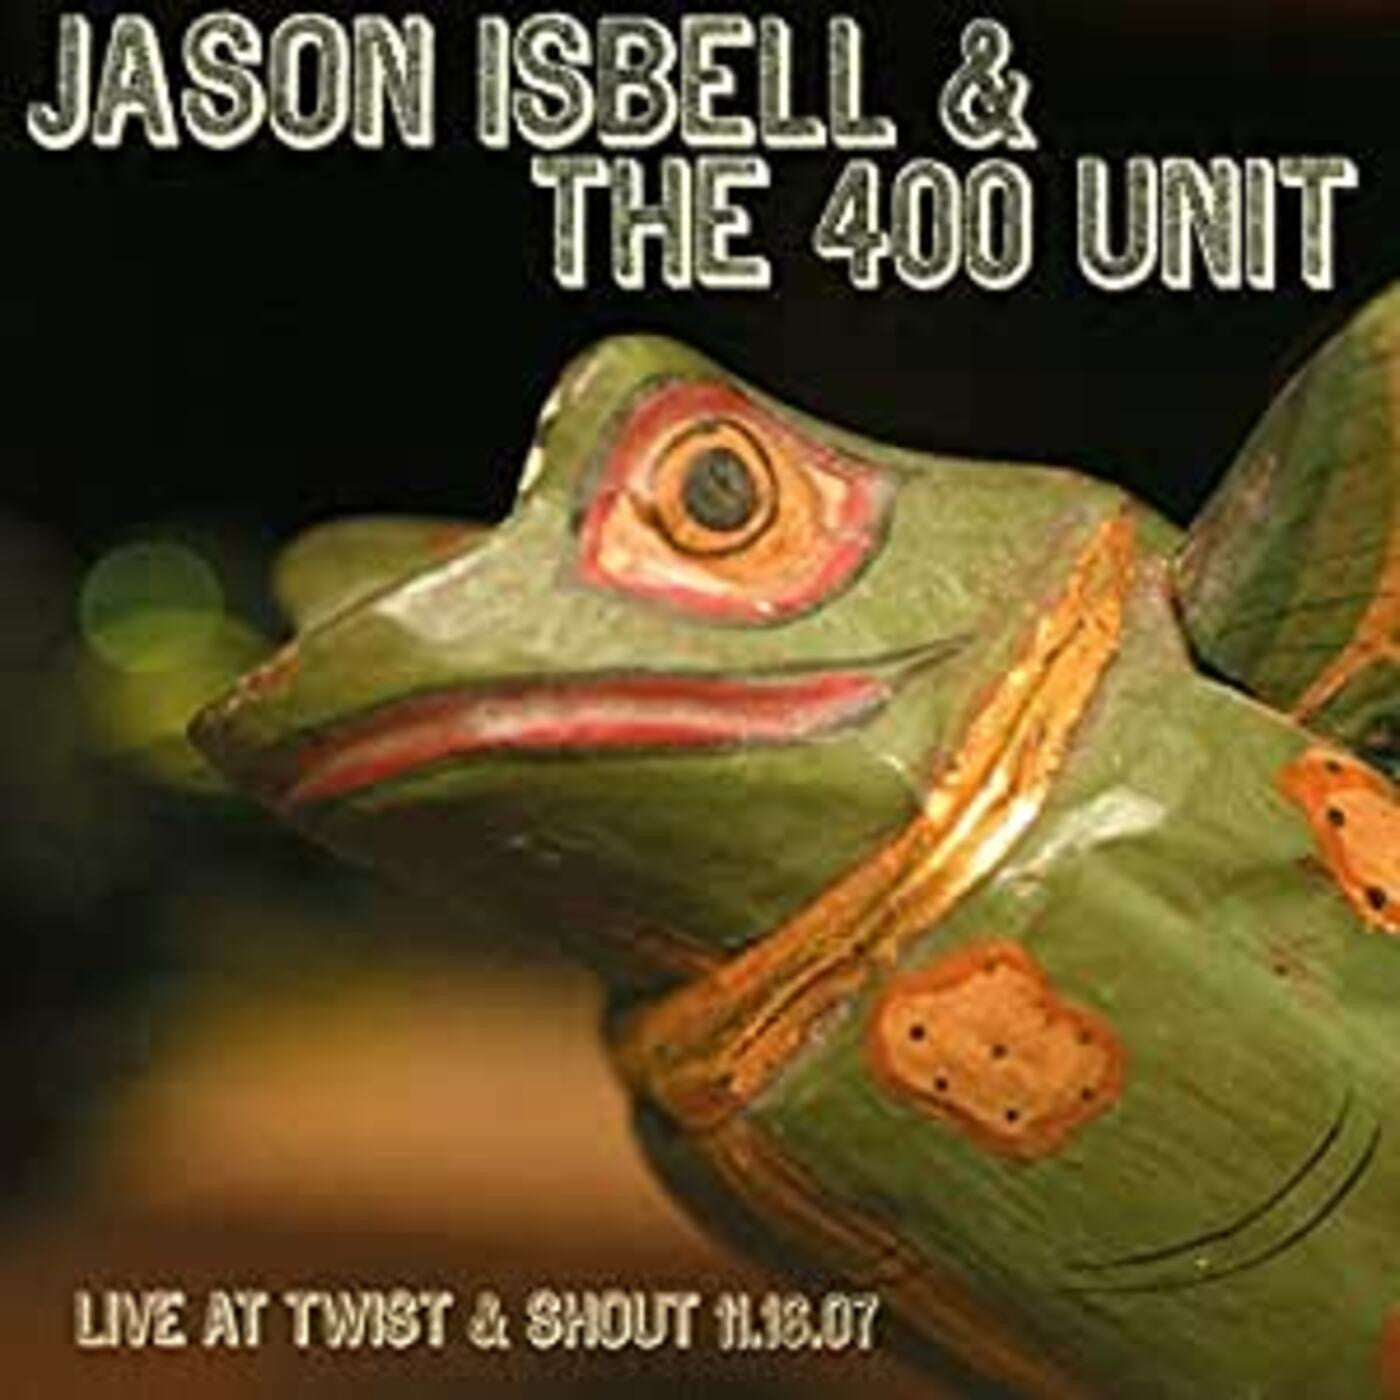 Jason Isbell & The 400 Unit - Twist & Shout 11.16.07 [Root Beer Swirl Vinyl]